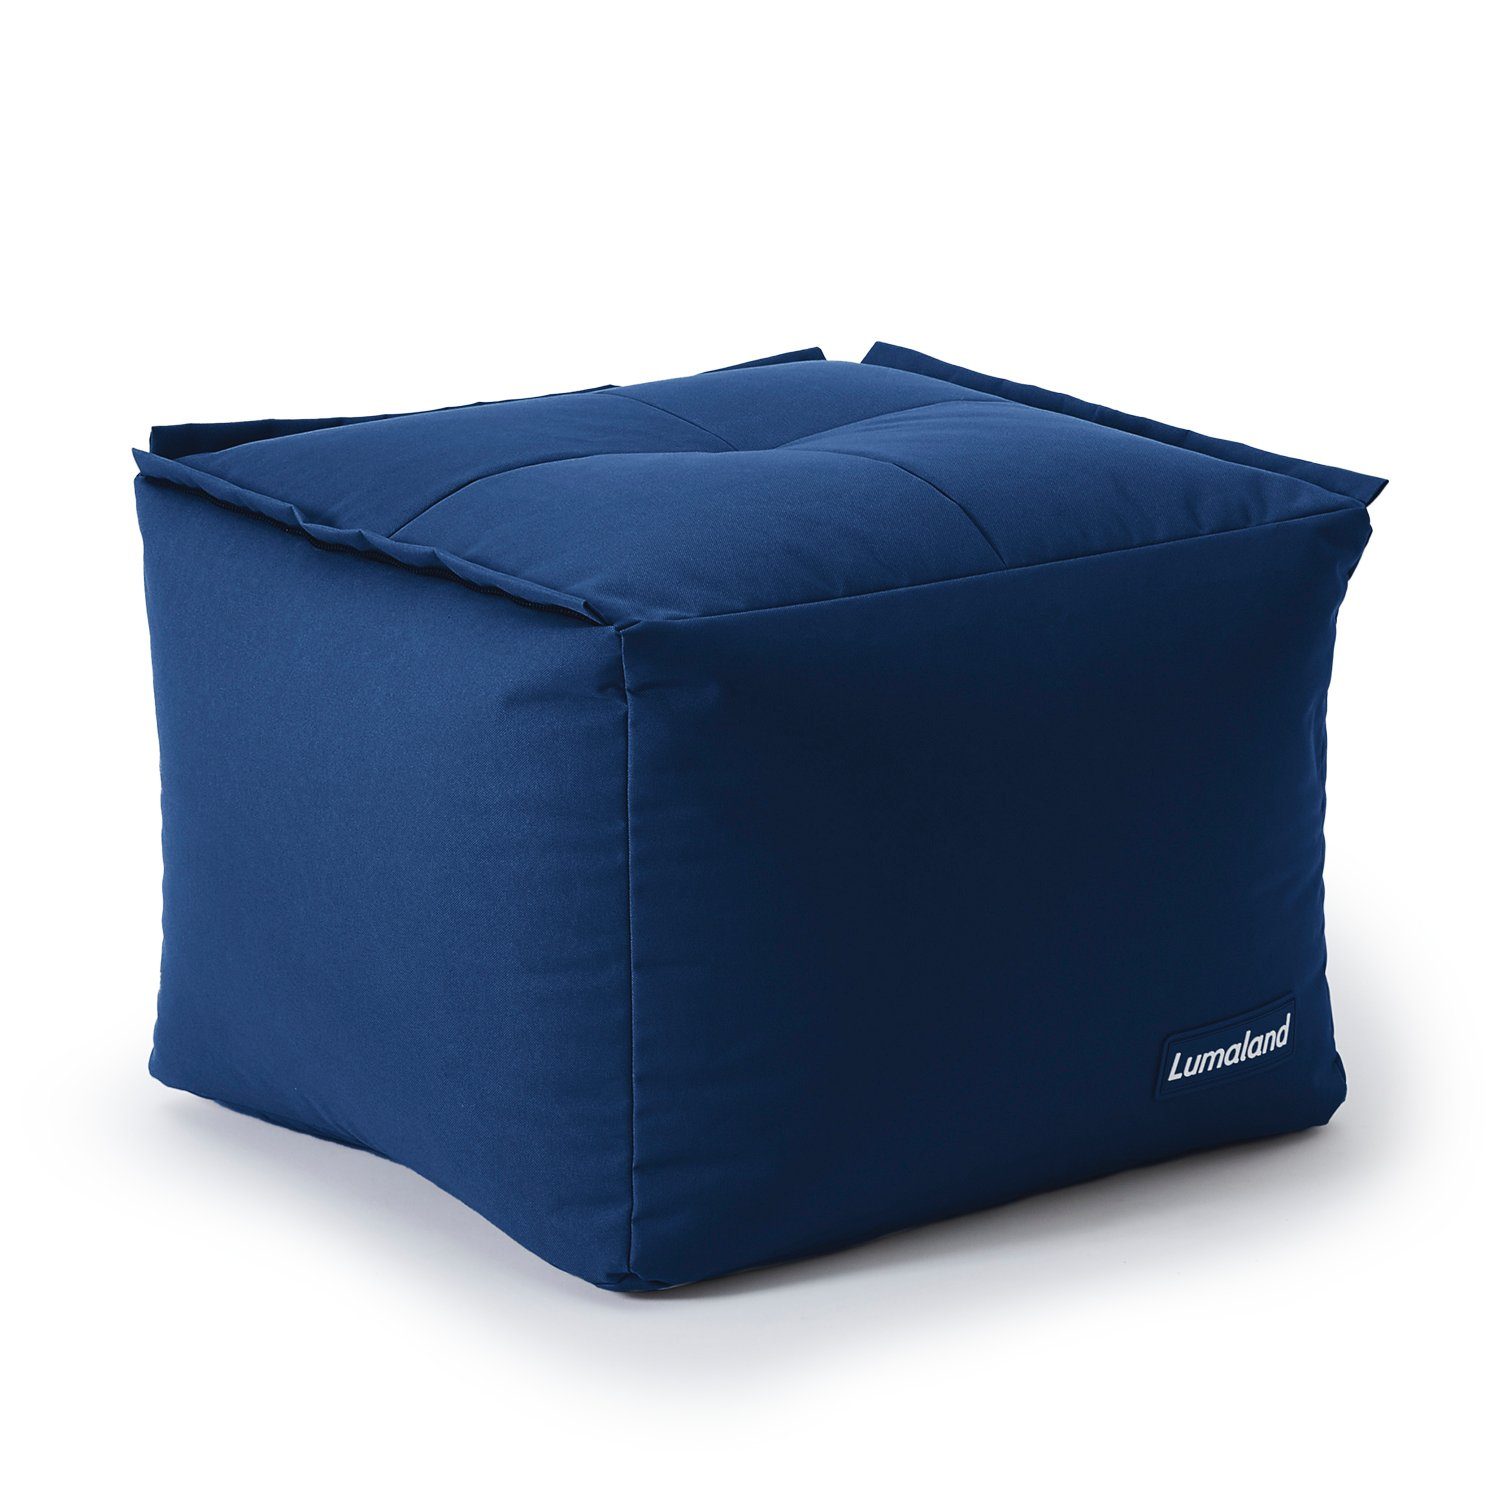 Lumaland Loungeset In- & outdoor Sofa individuell kombinierbar mit dem Modularen System, Sessel wasserfest abnehmbarer Bezug erweiterbar waschbar blau